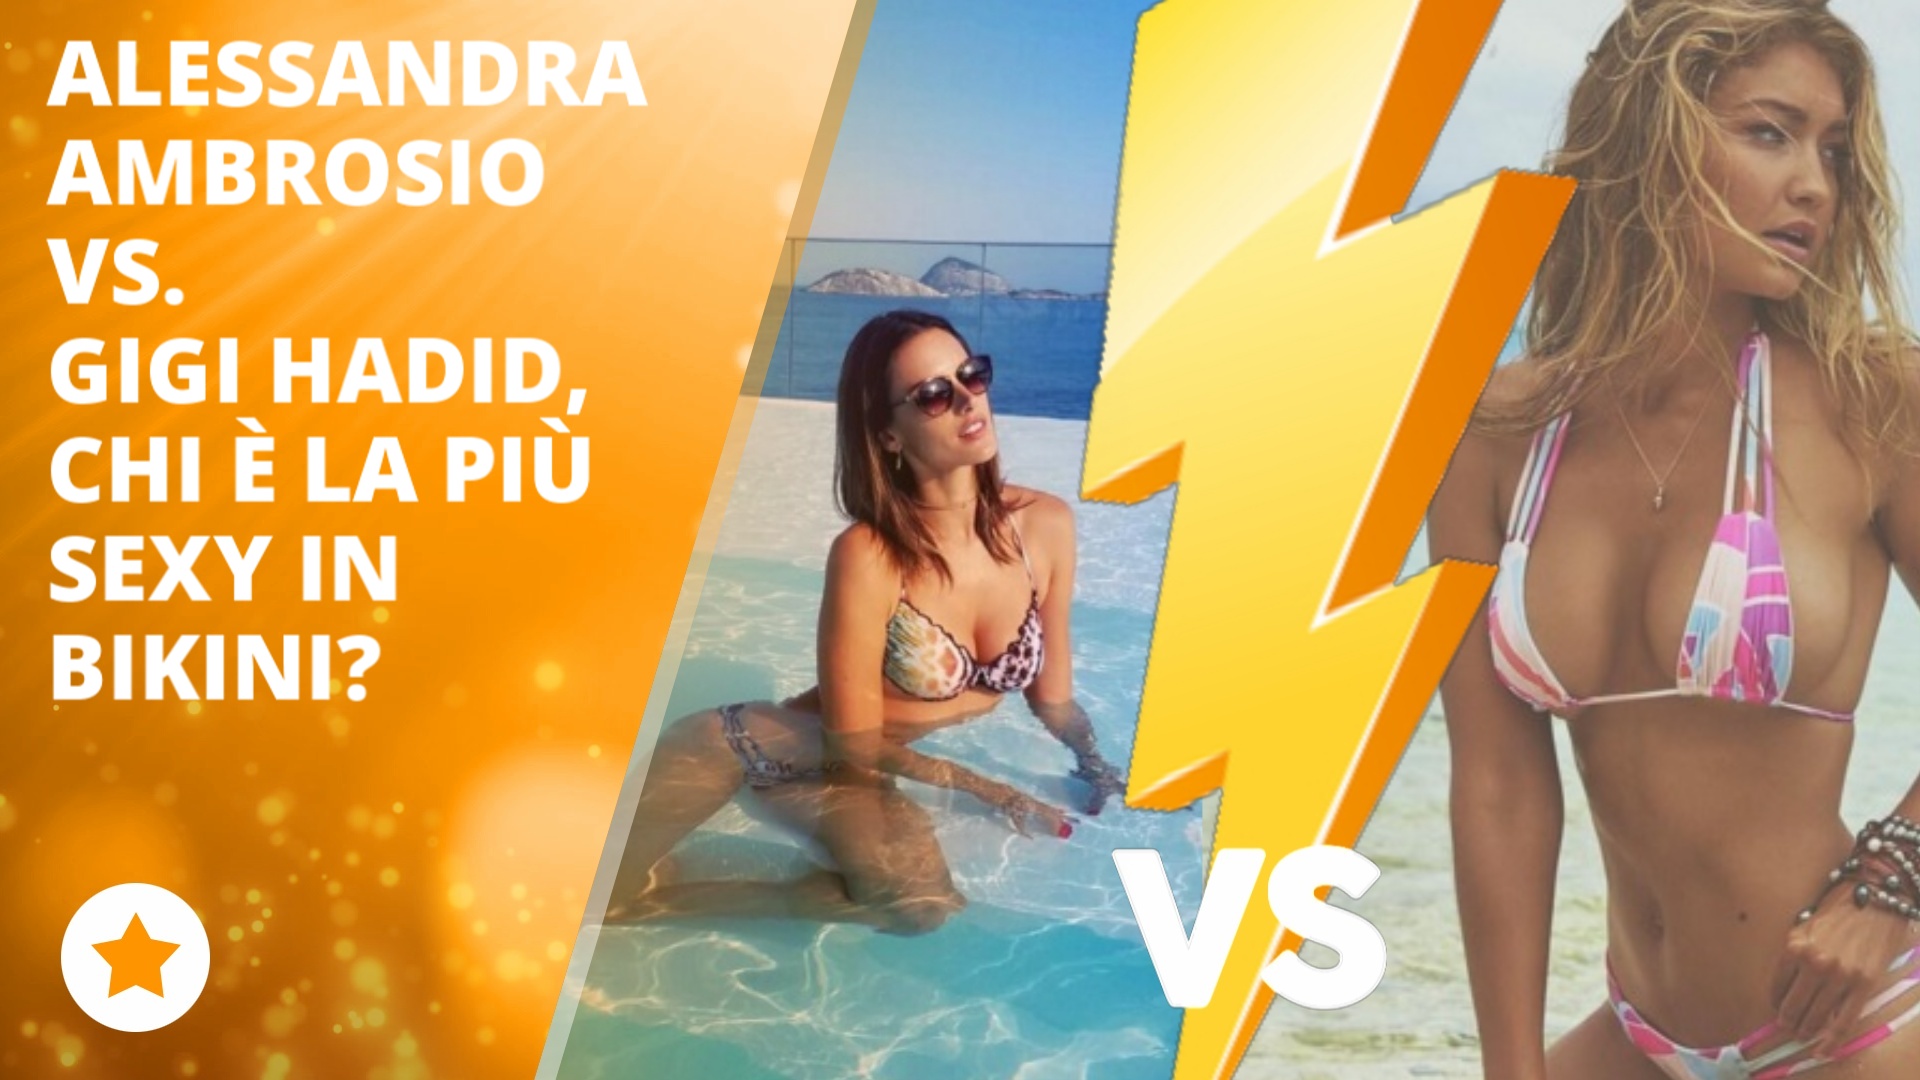 Battaglia in bikini: Alessandra Ambrosio vs Gigi Hadid